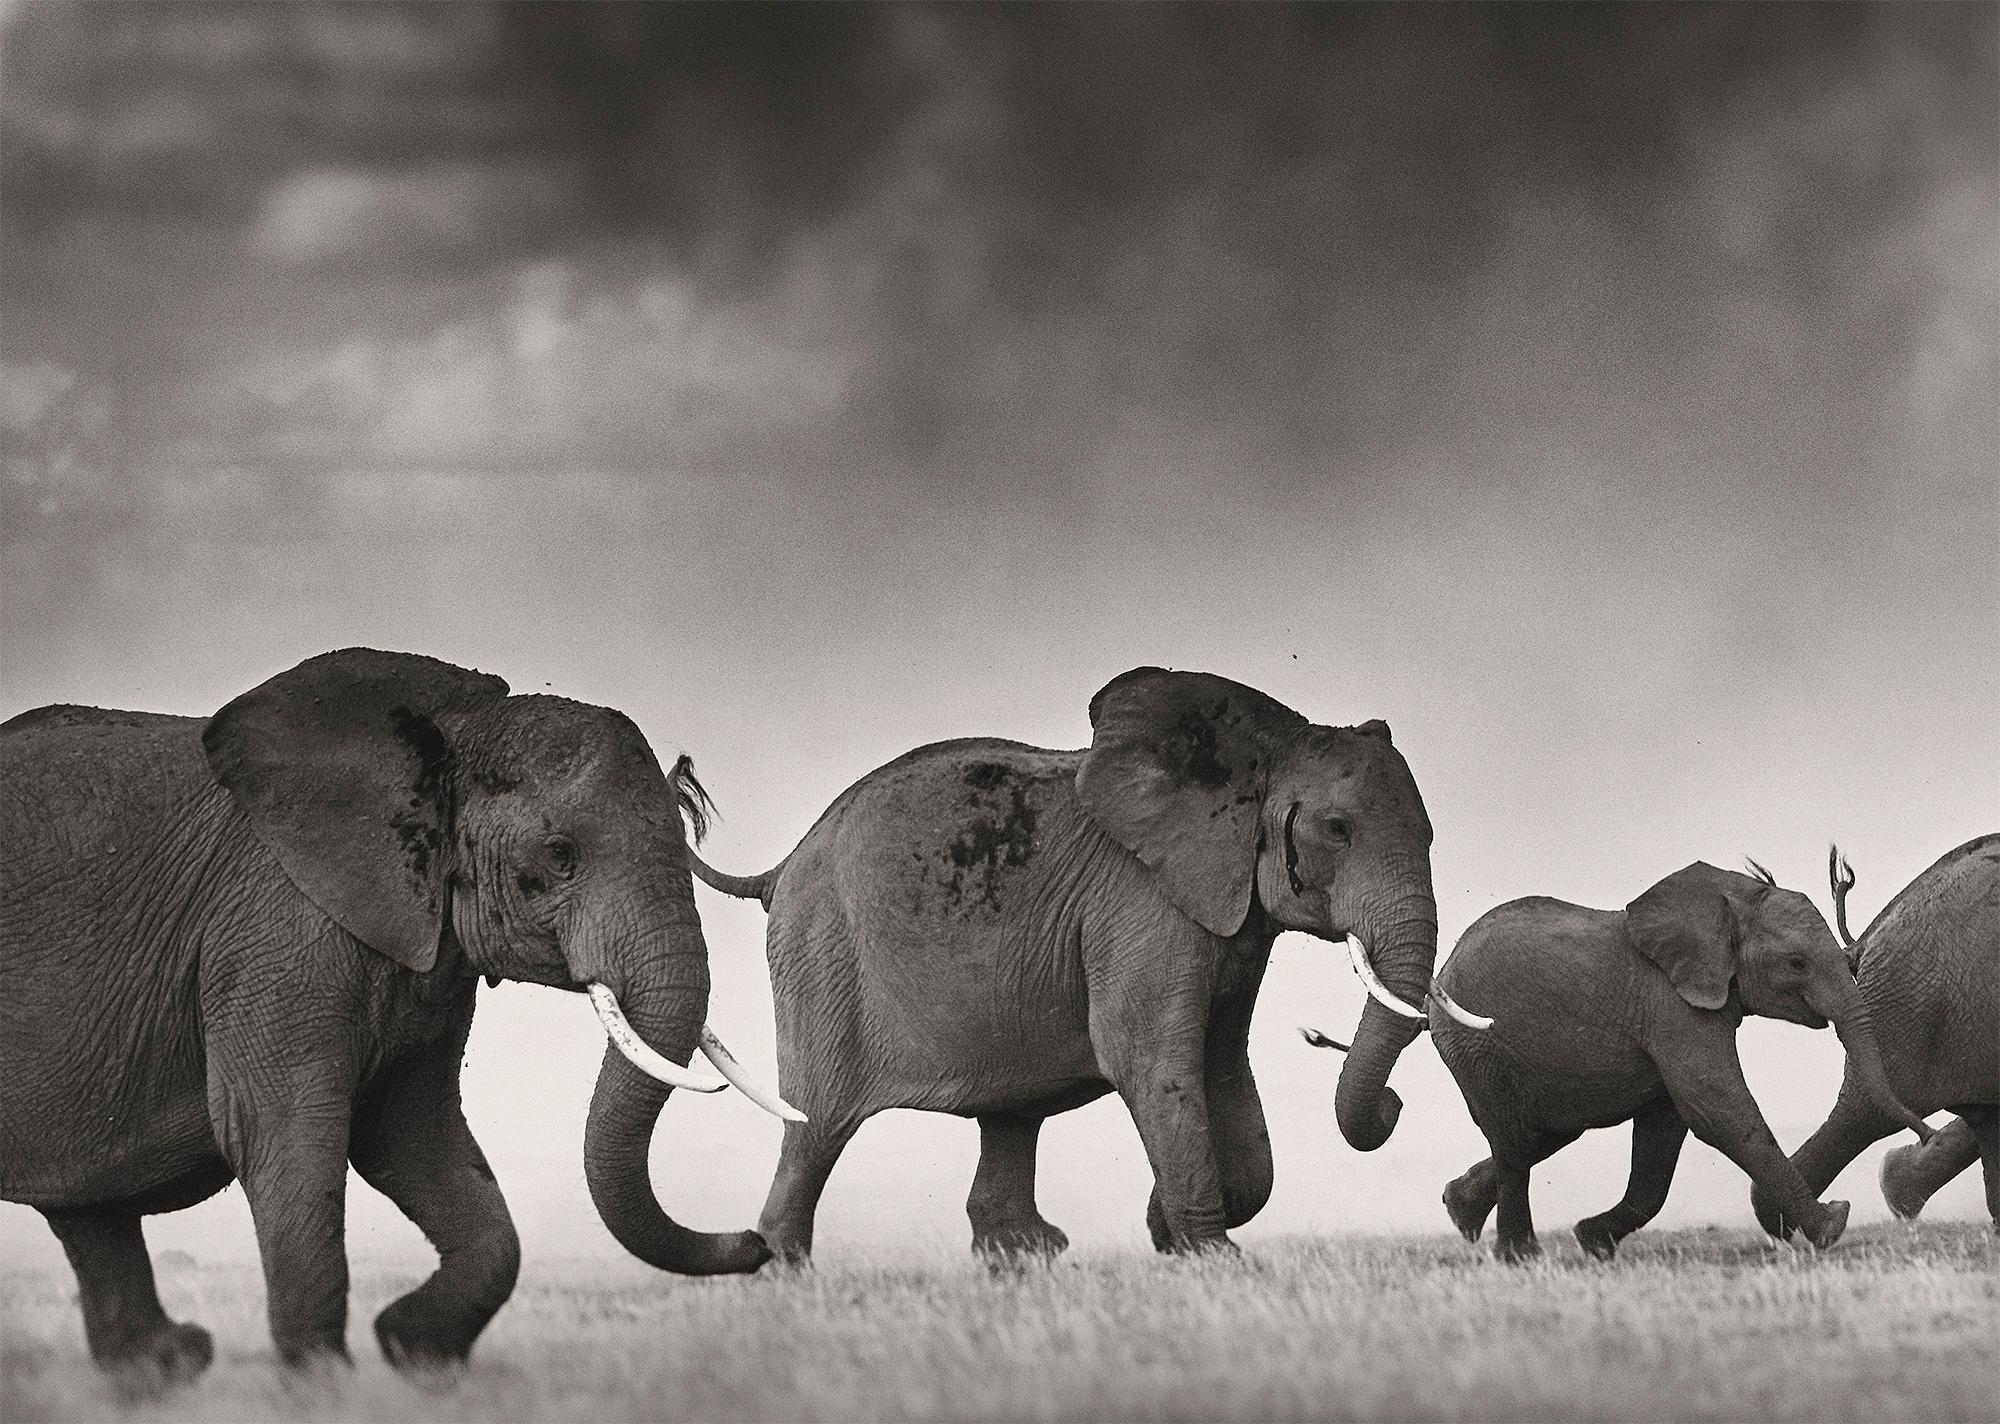 Thunderstorm II, Platinum, animal, elephant, black and white photography - Black Landscape Photograph by Joachim Schmeisser